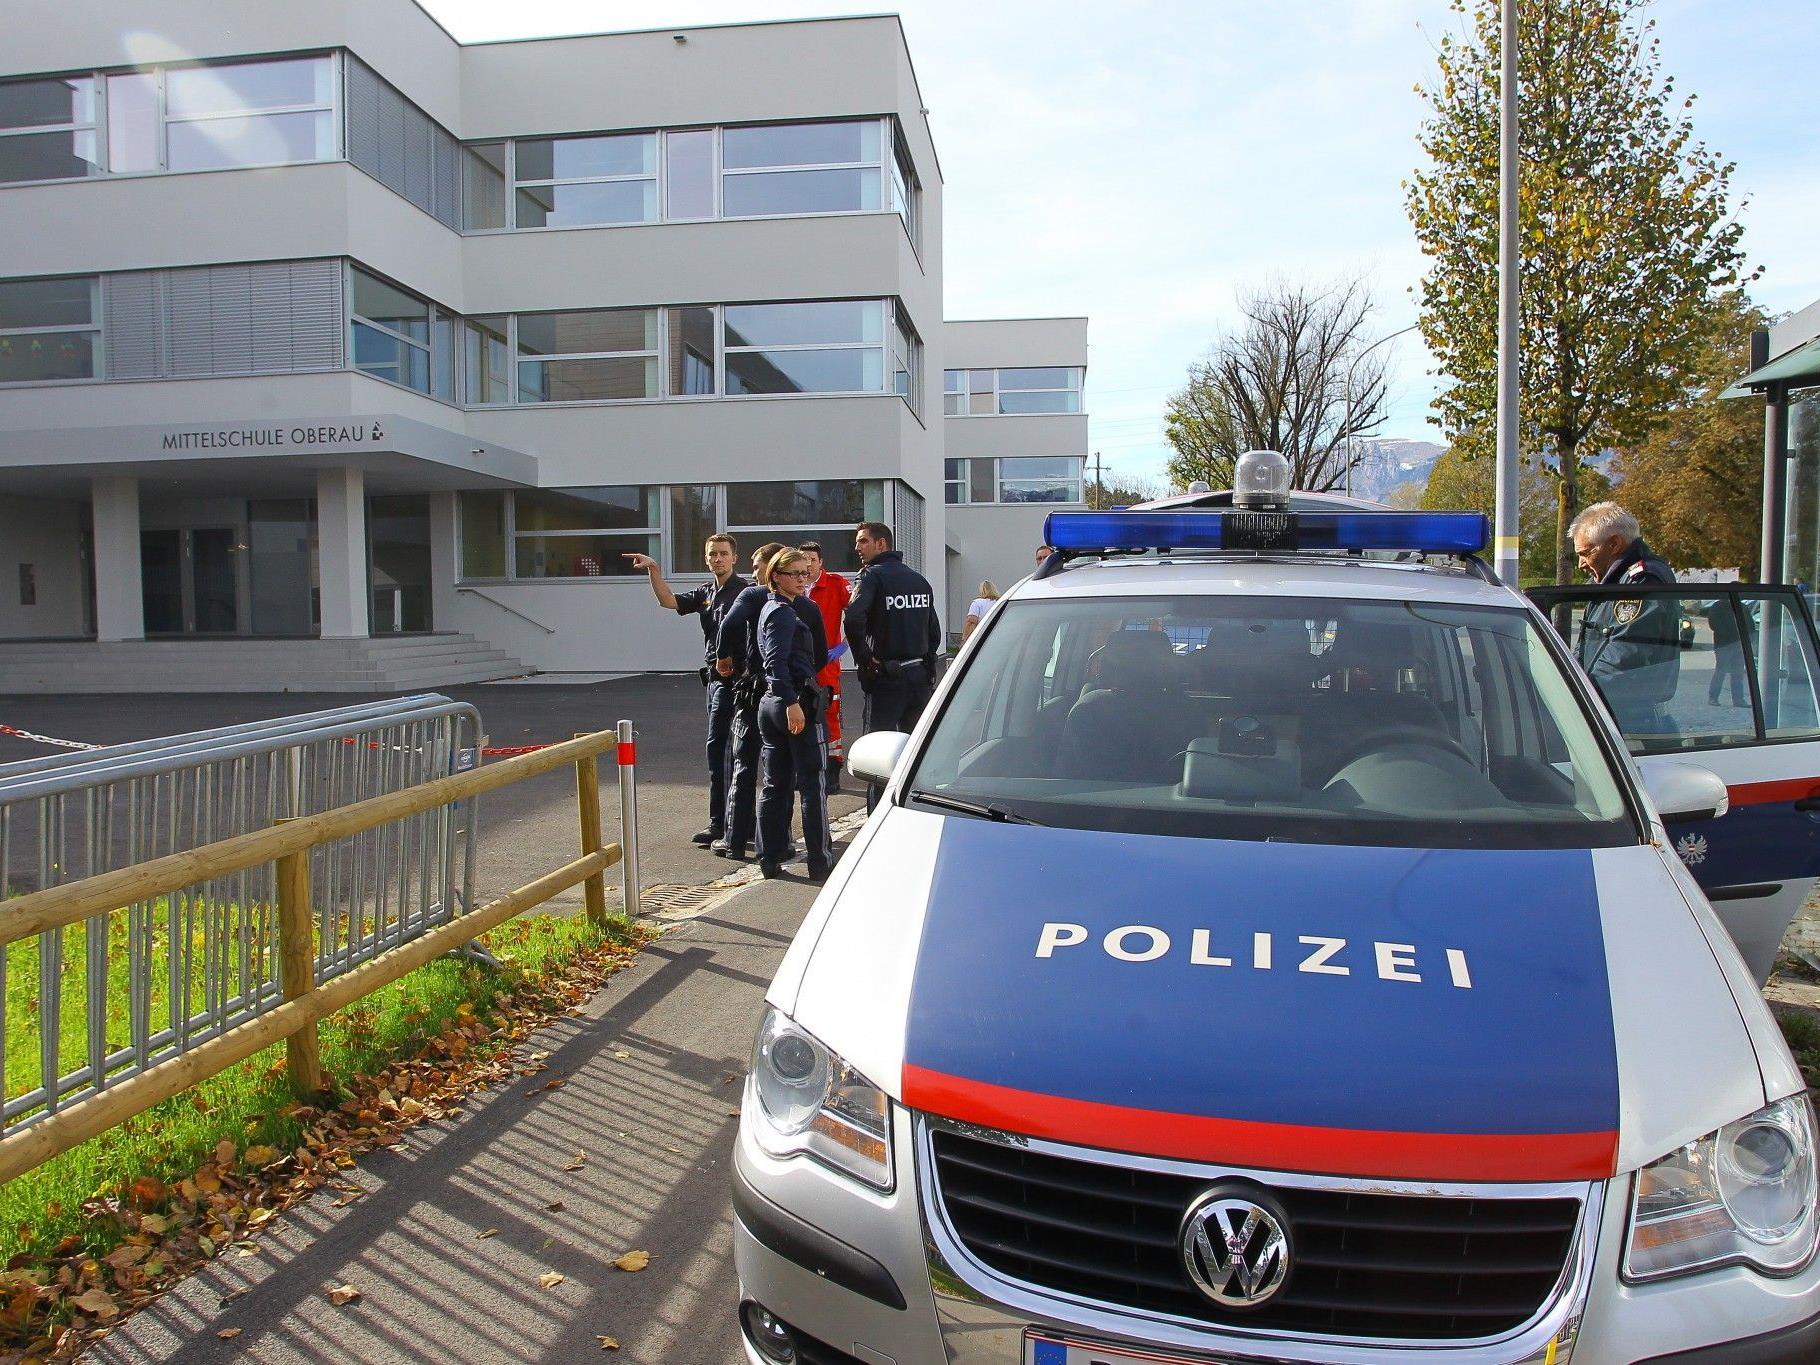 Vermeintlicher Amok-Alarm in der Schule Oberau in Feldkirch